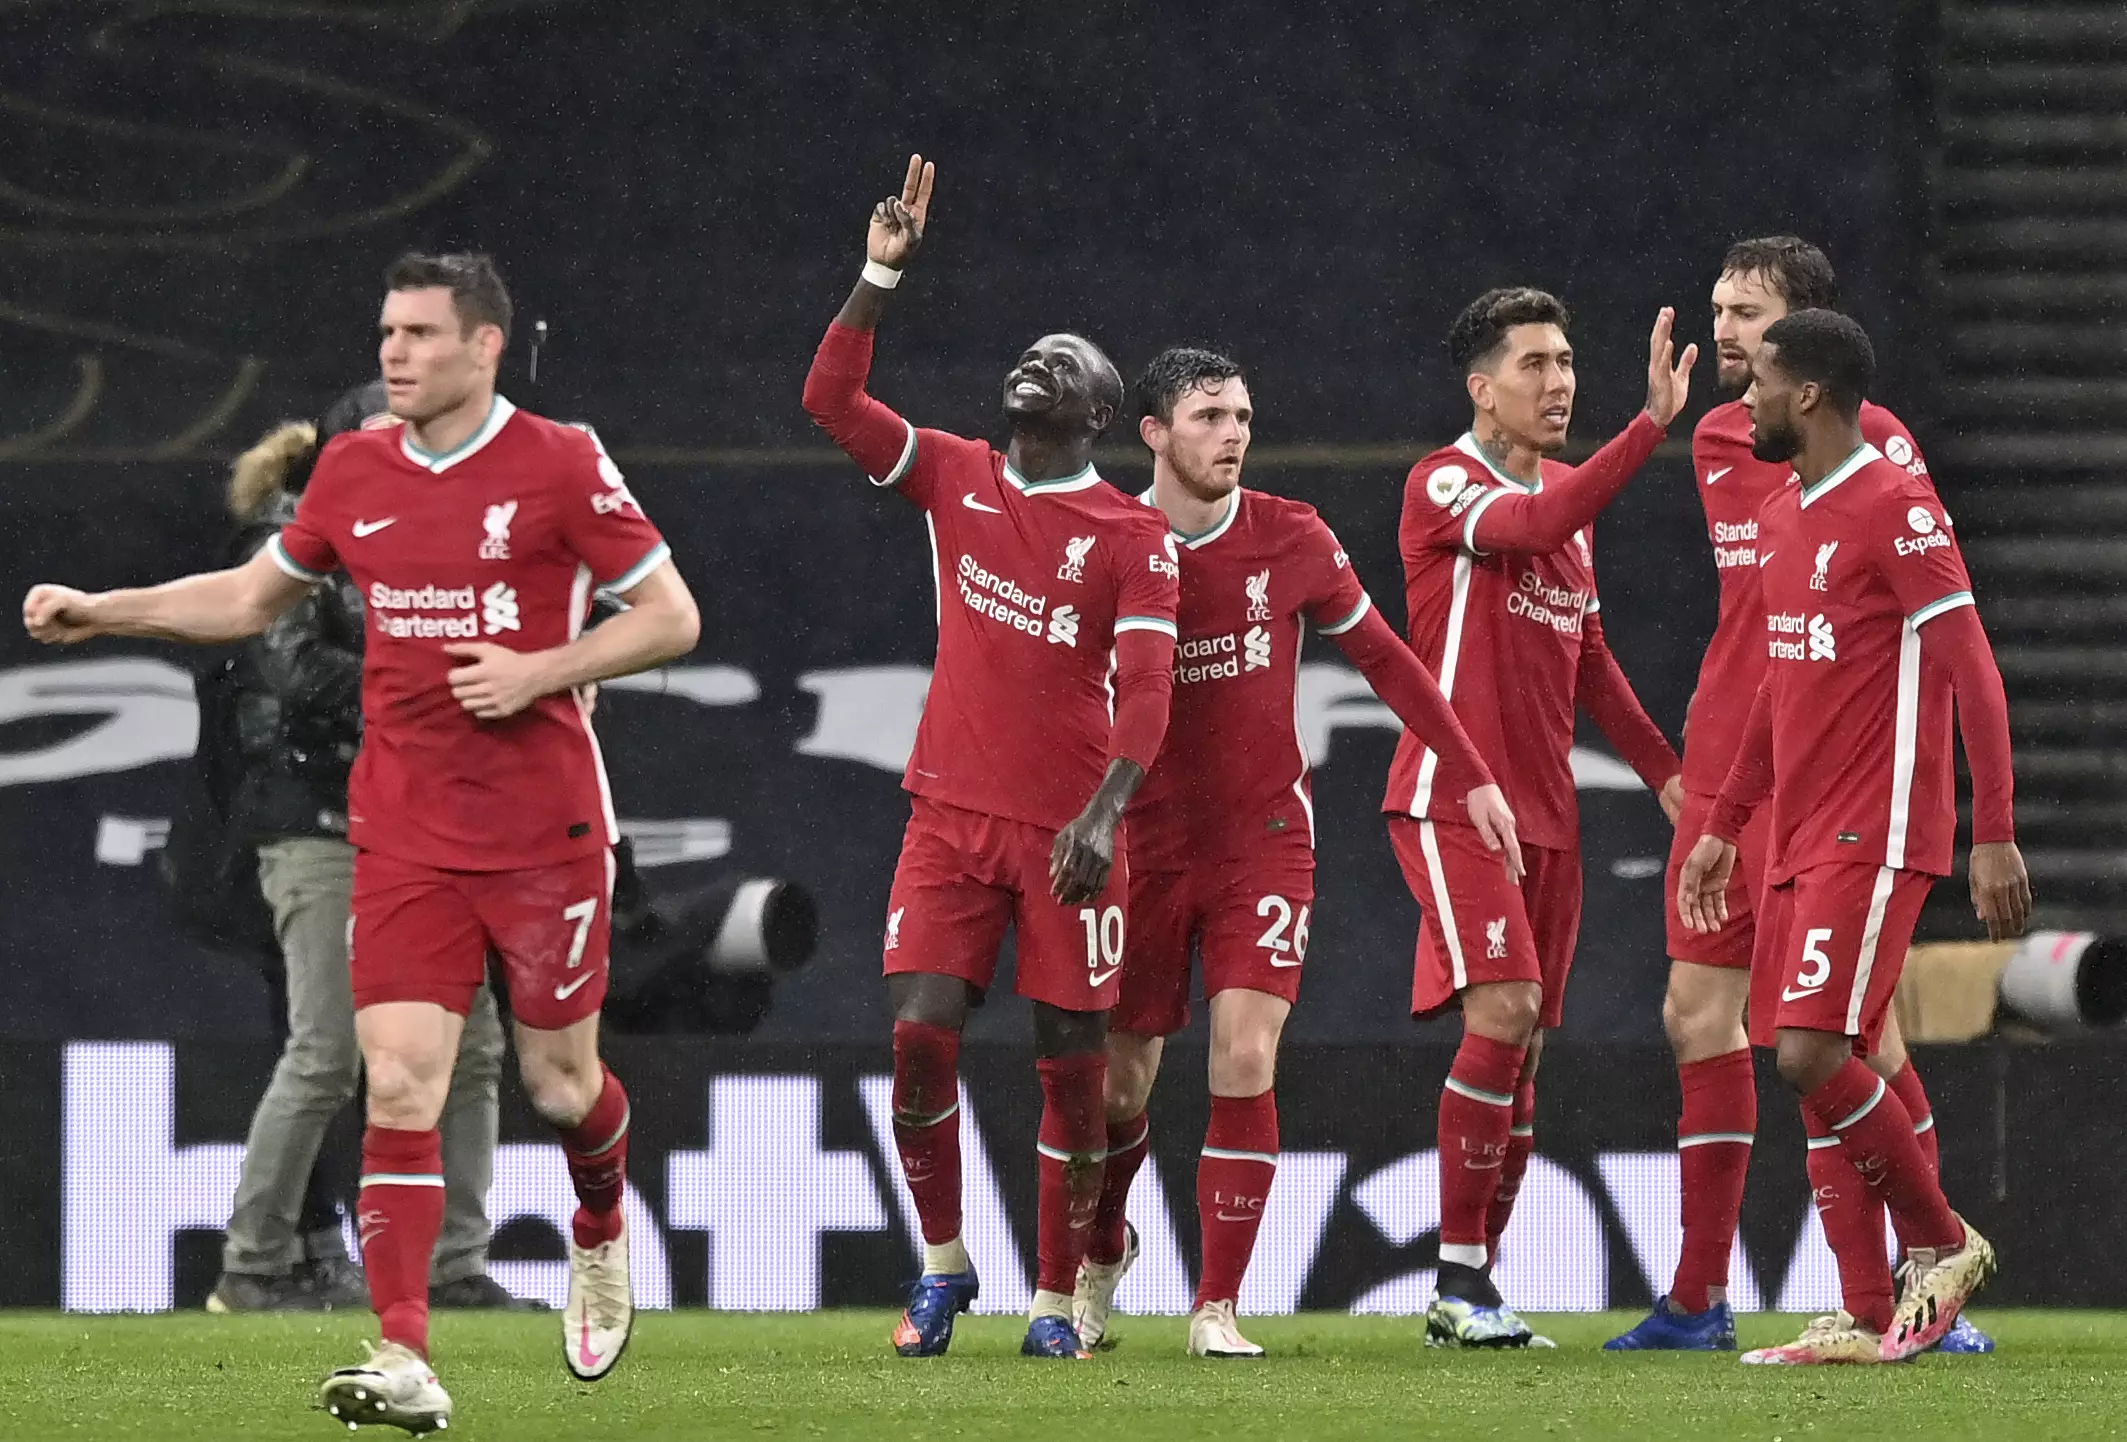 Liverpool celebrate Sadio Mane's goal, their third of the game. (Image